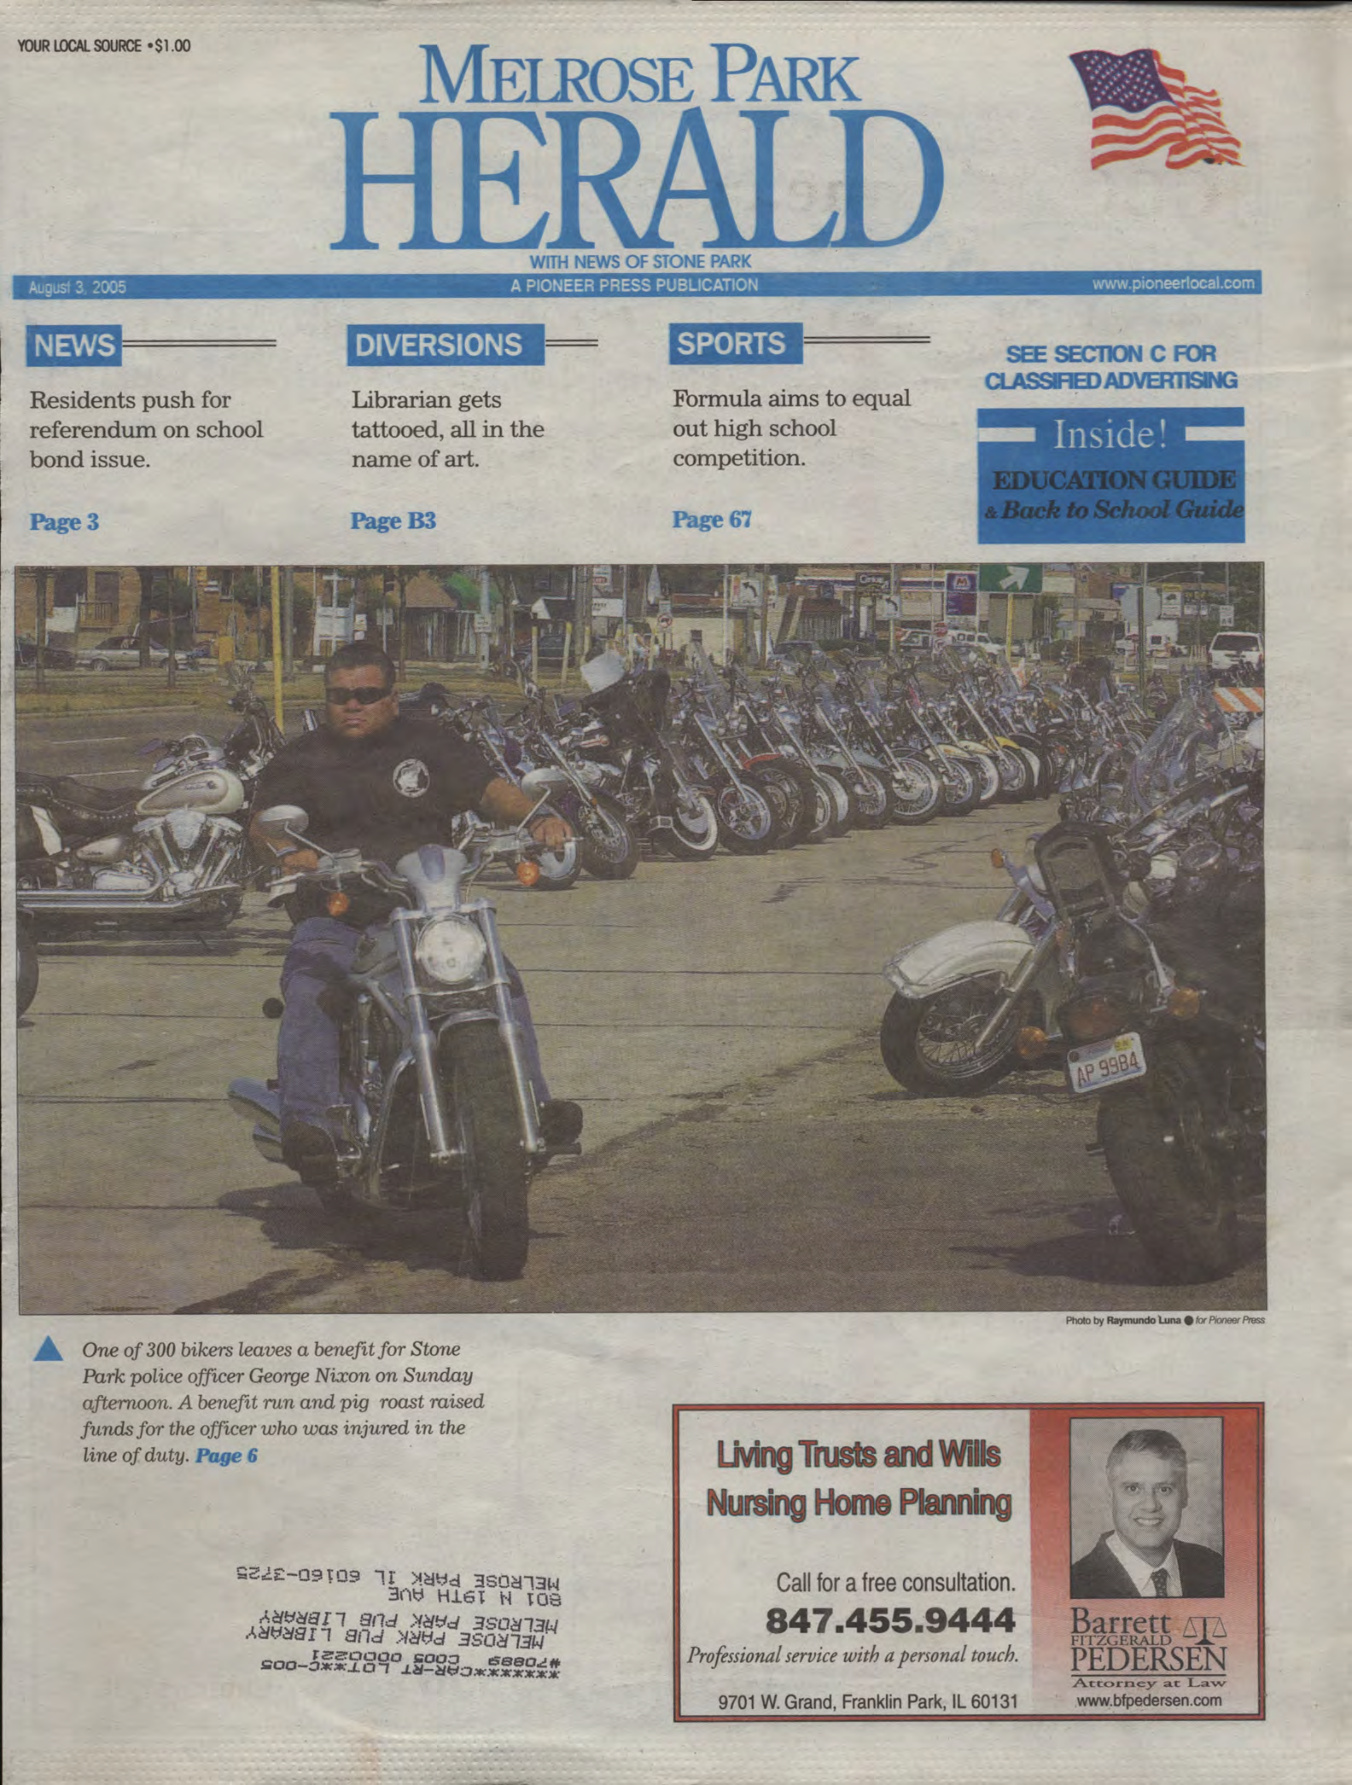 The Herald – 20050803